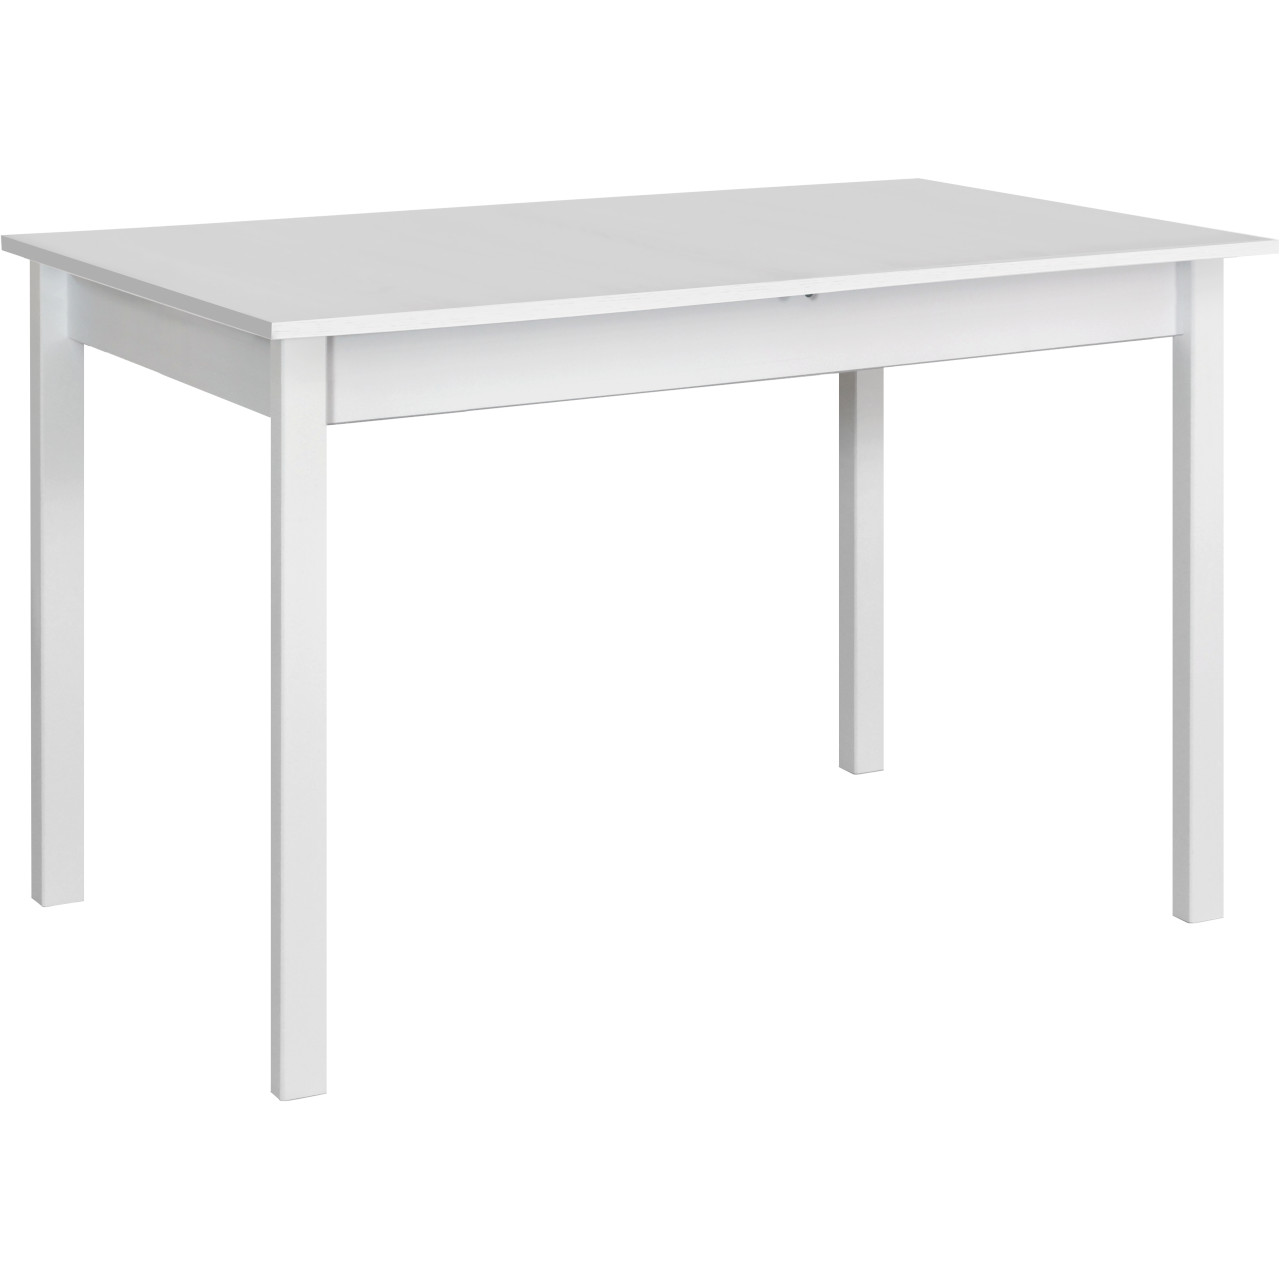 Table MAX 2 60x110 white laminate